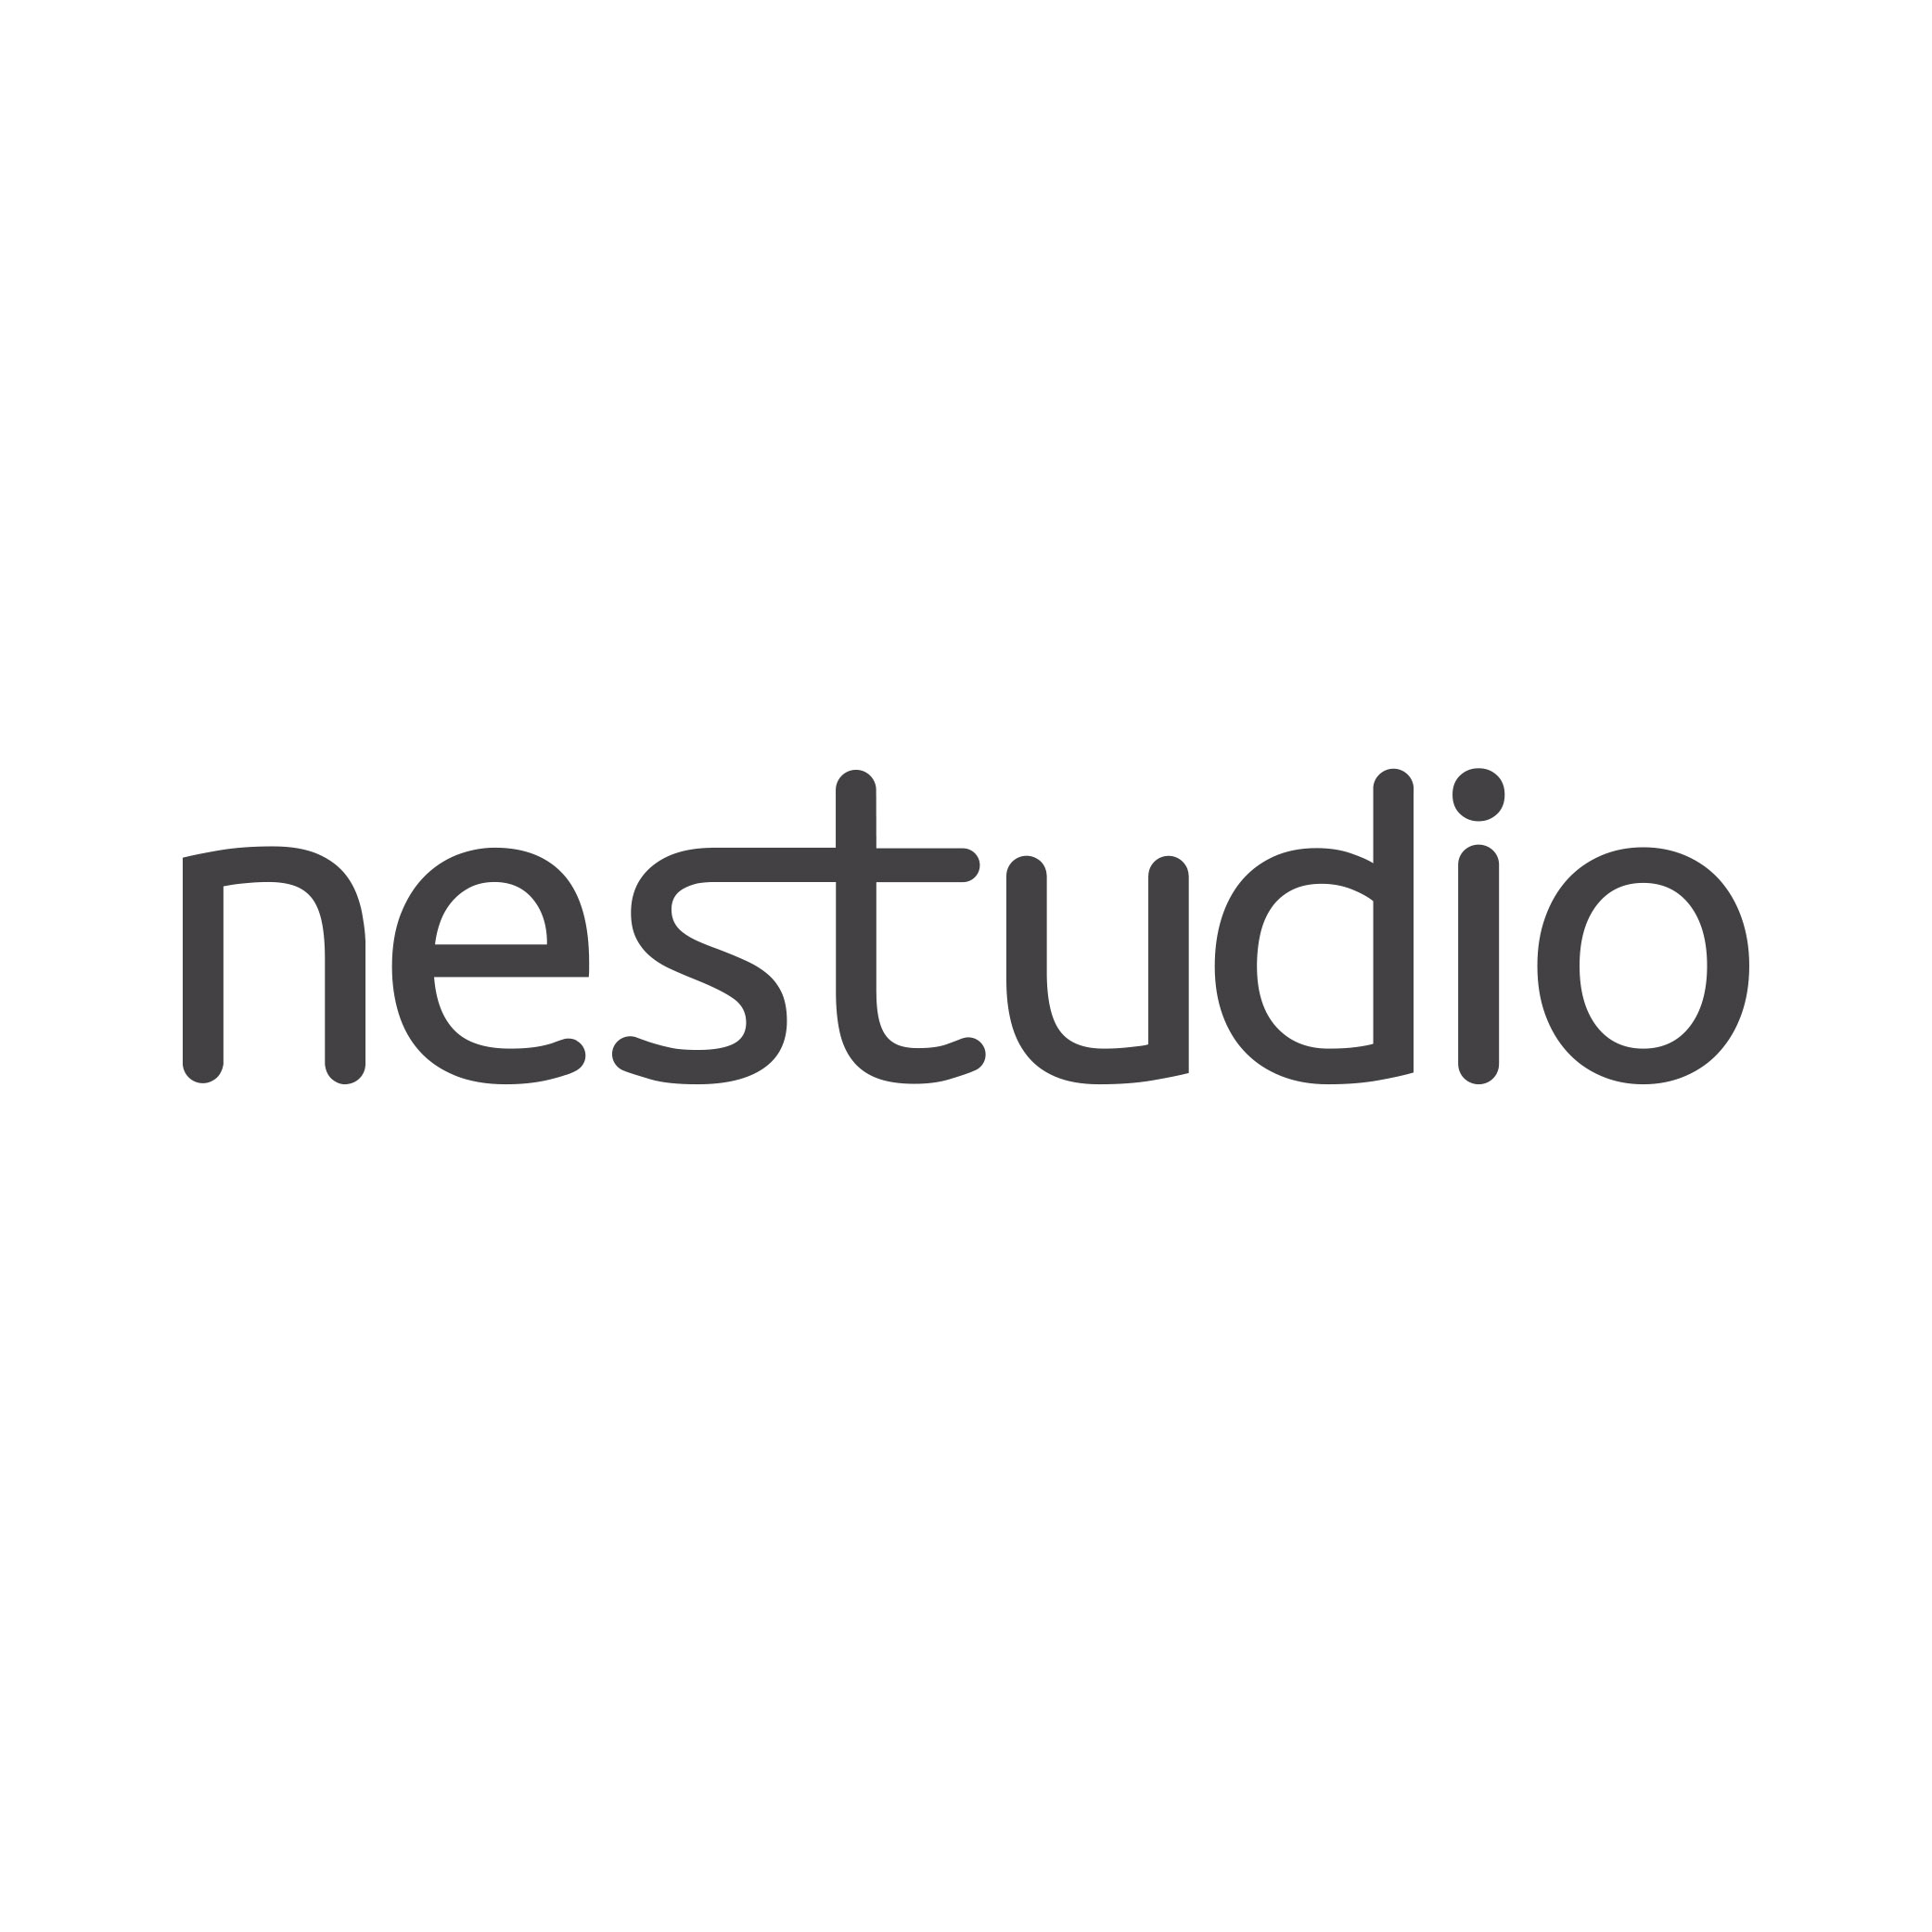 Nestudio Official Store